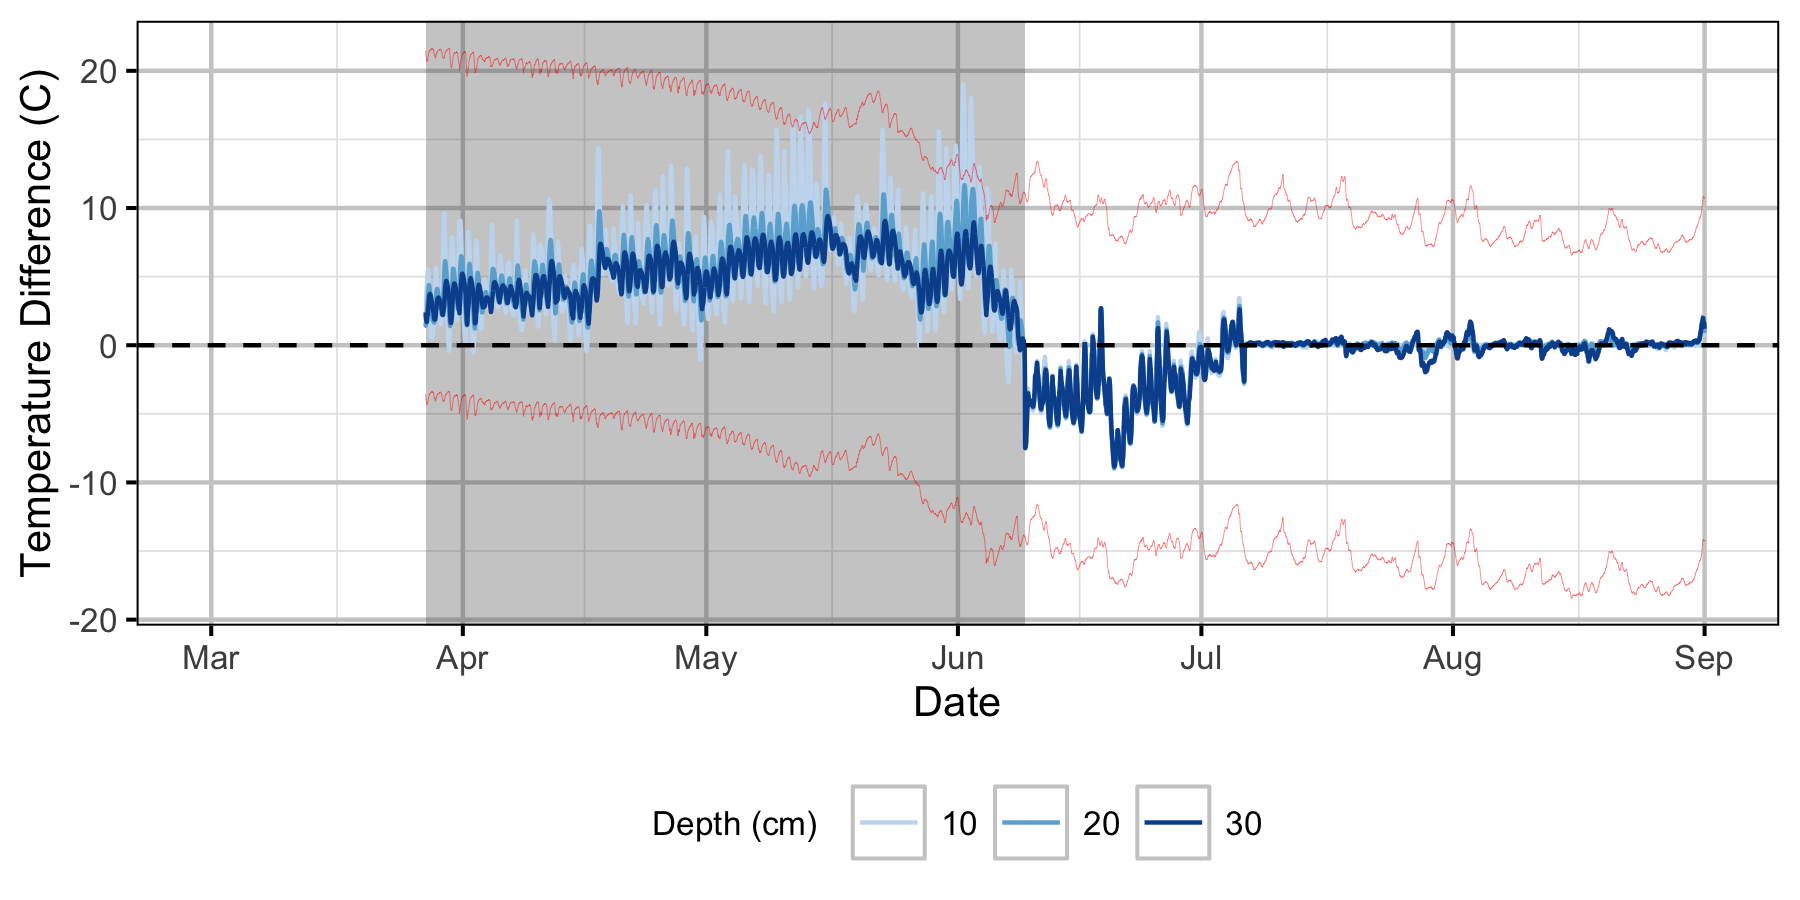 figures/Sensor Data/Relative Gravel Temperature Stations/Norns Creek Fan/Station06.png